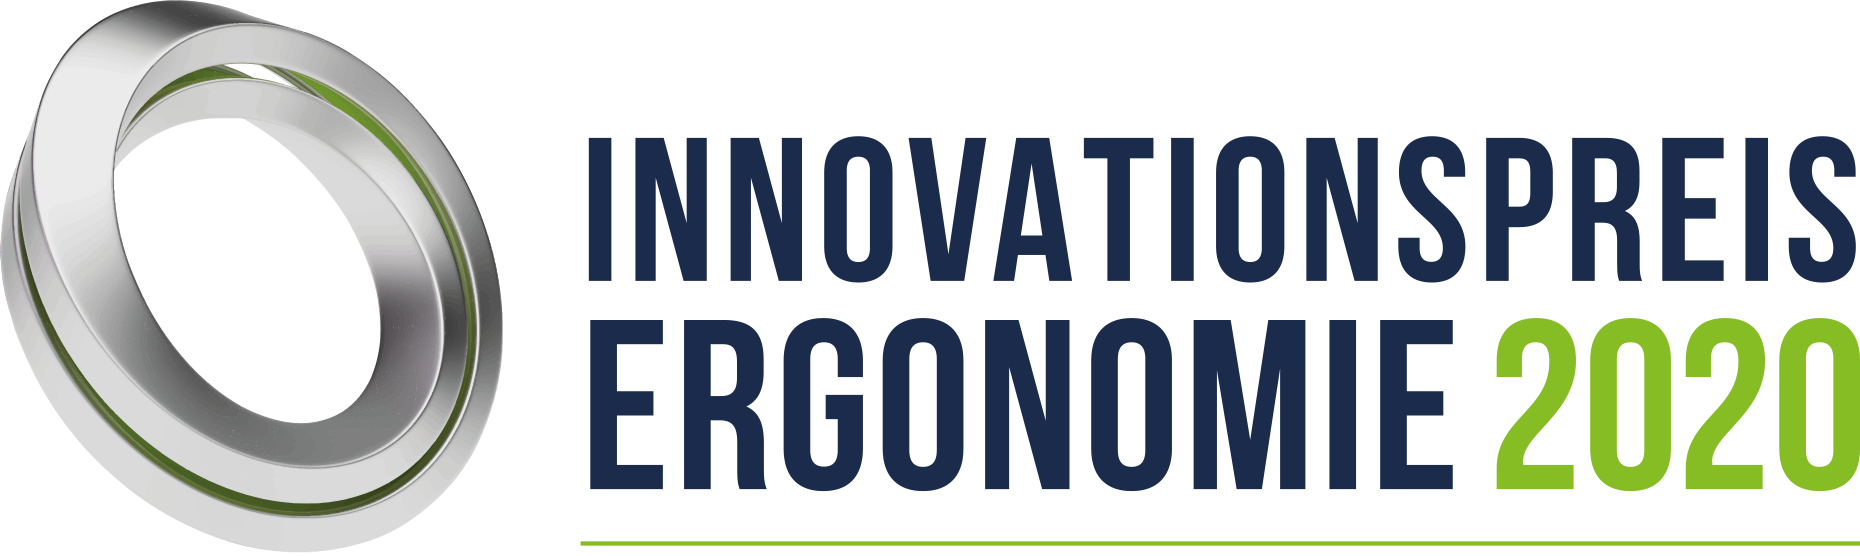 Innovationspreis Ergonomie 2020